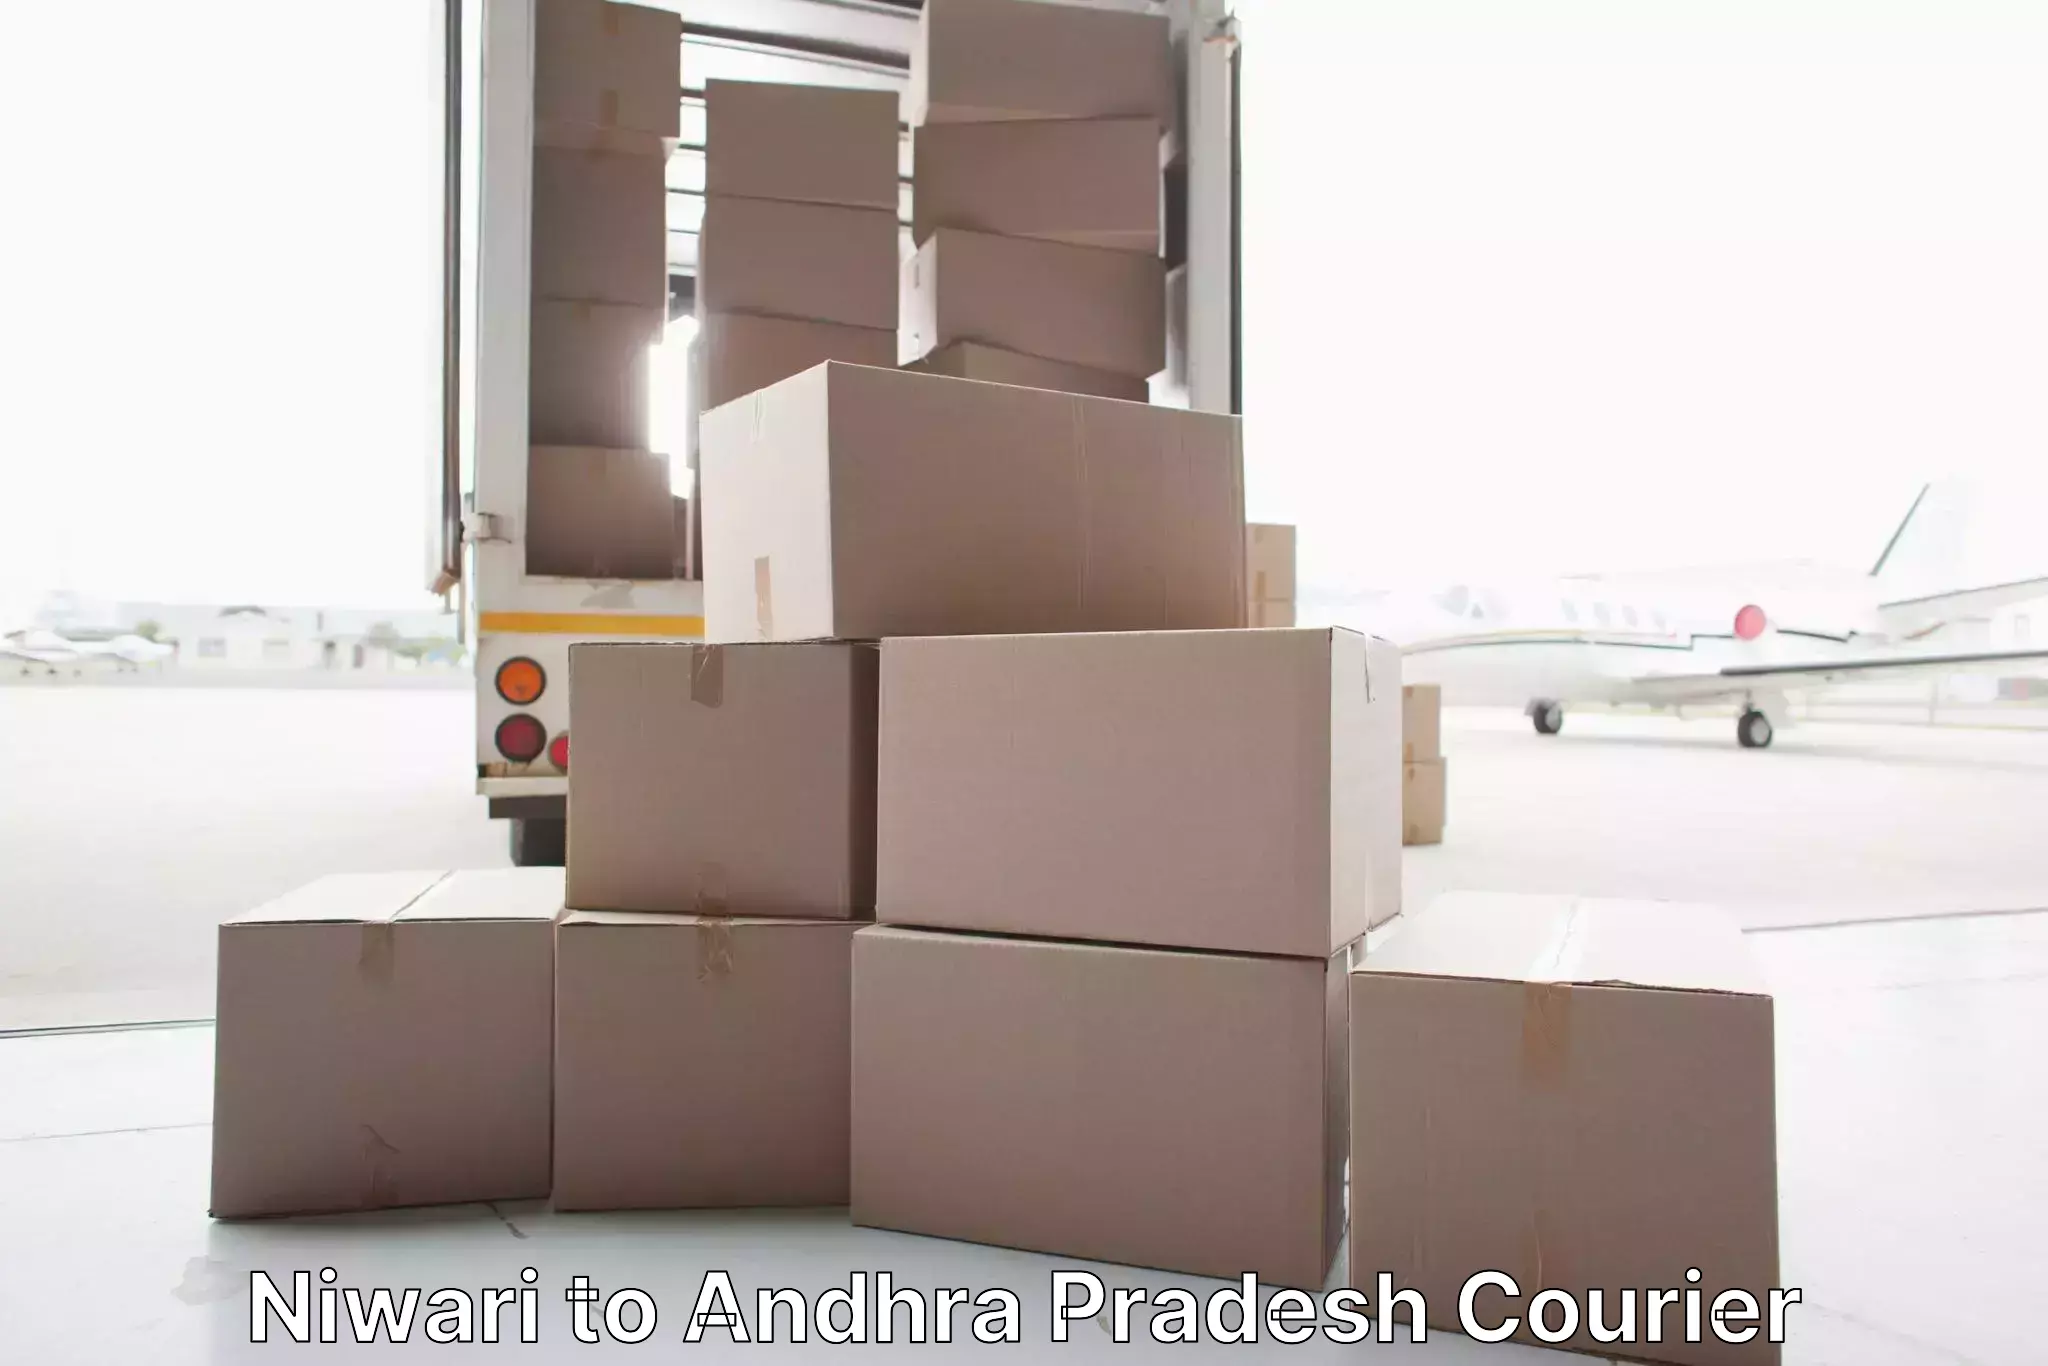 Professional moving company Niwari to Andhra Pradesh